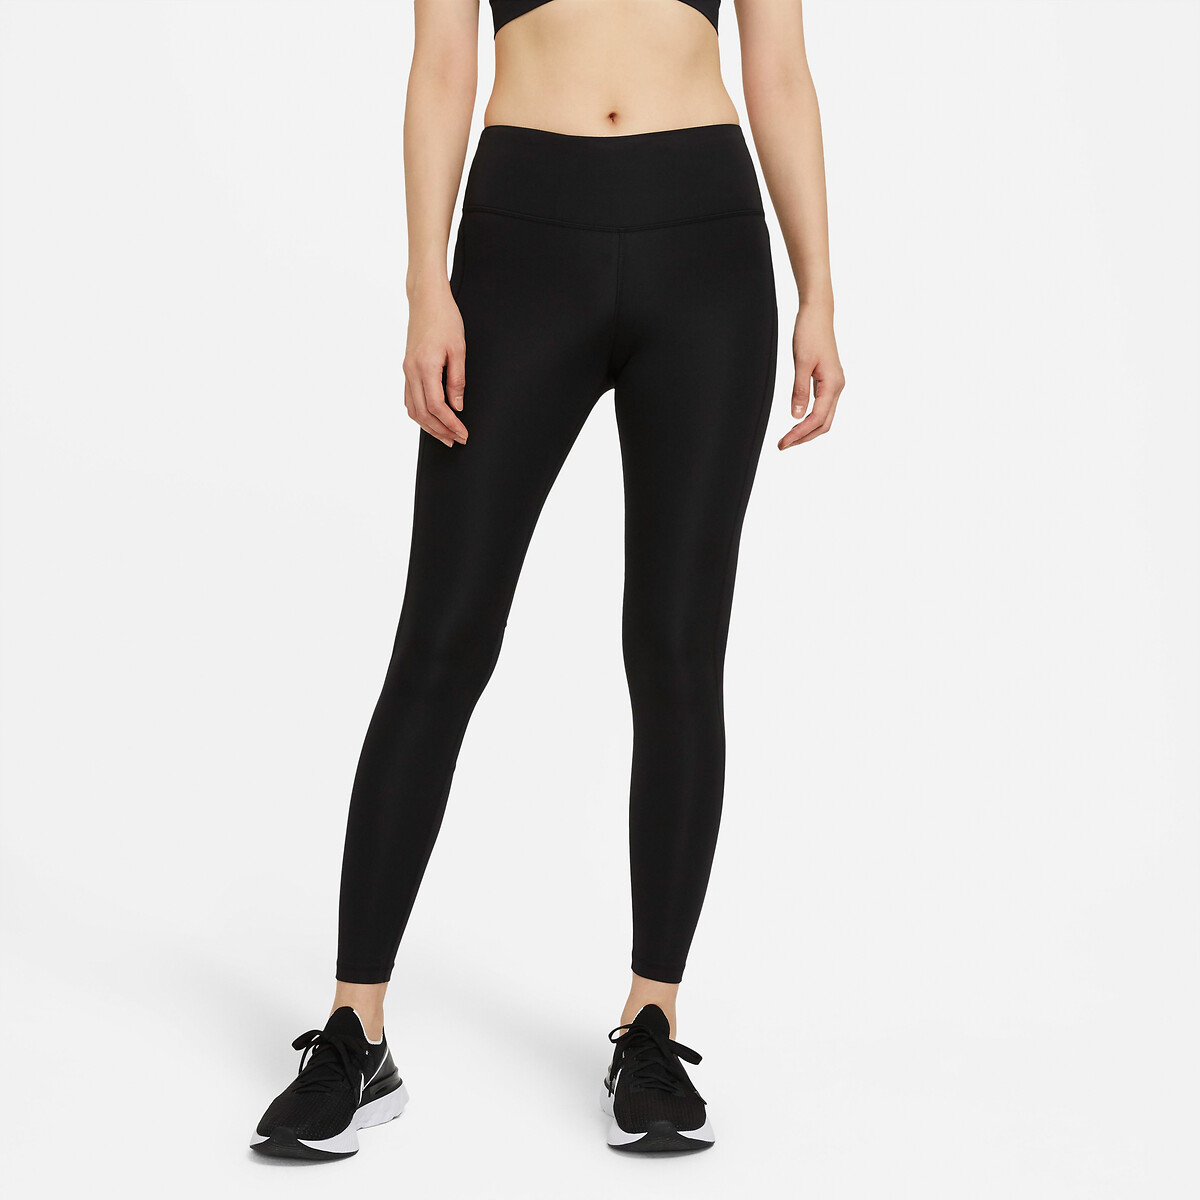 Detector is genoeg opleggen Running legging zwart Nike | La Redoute